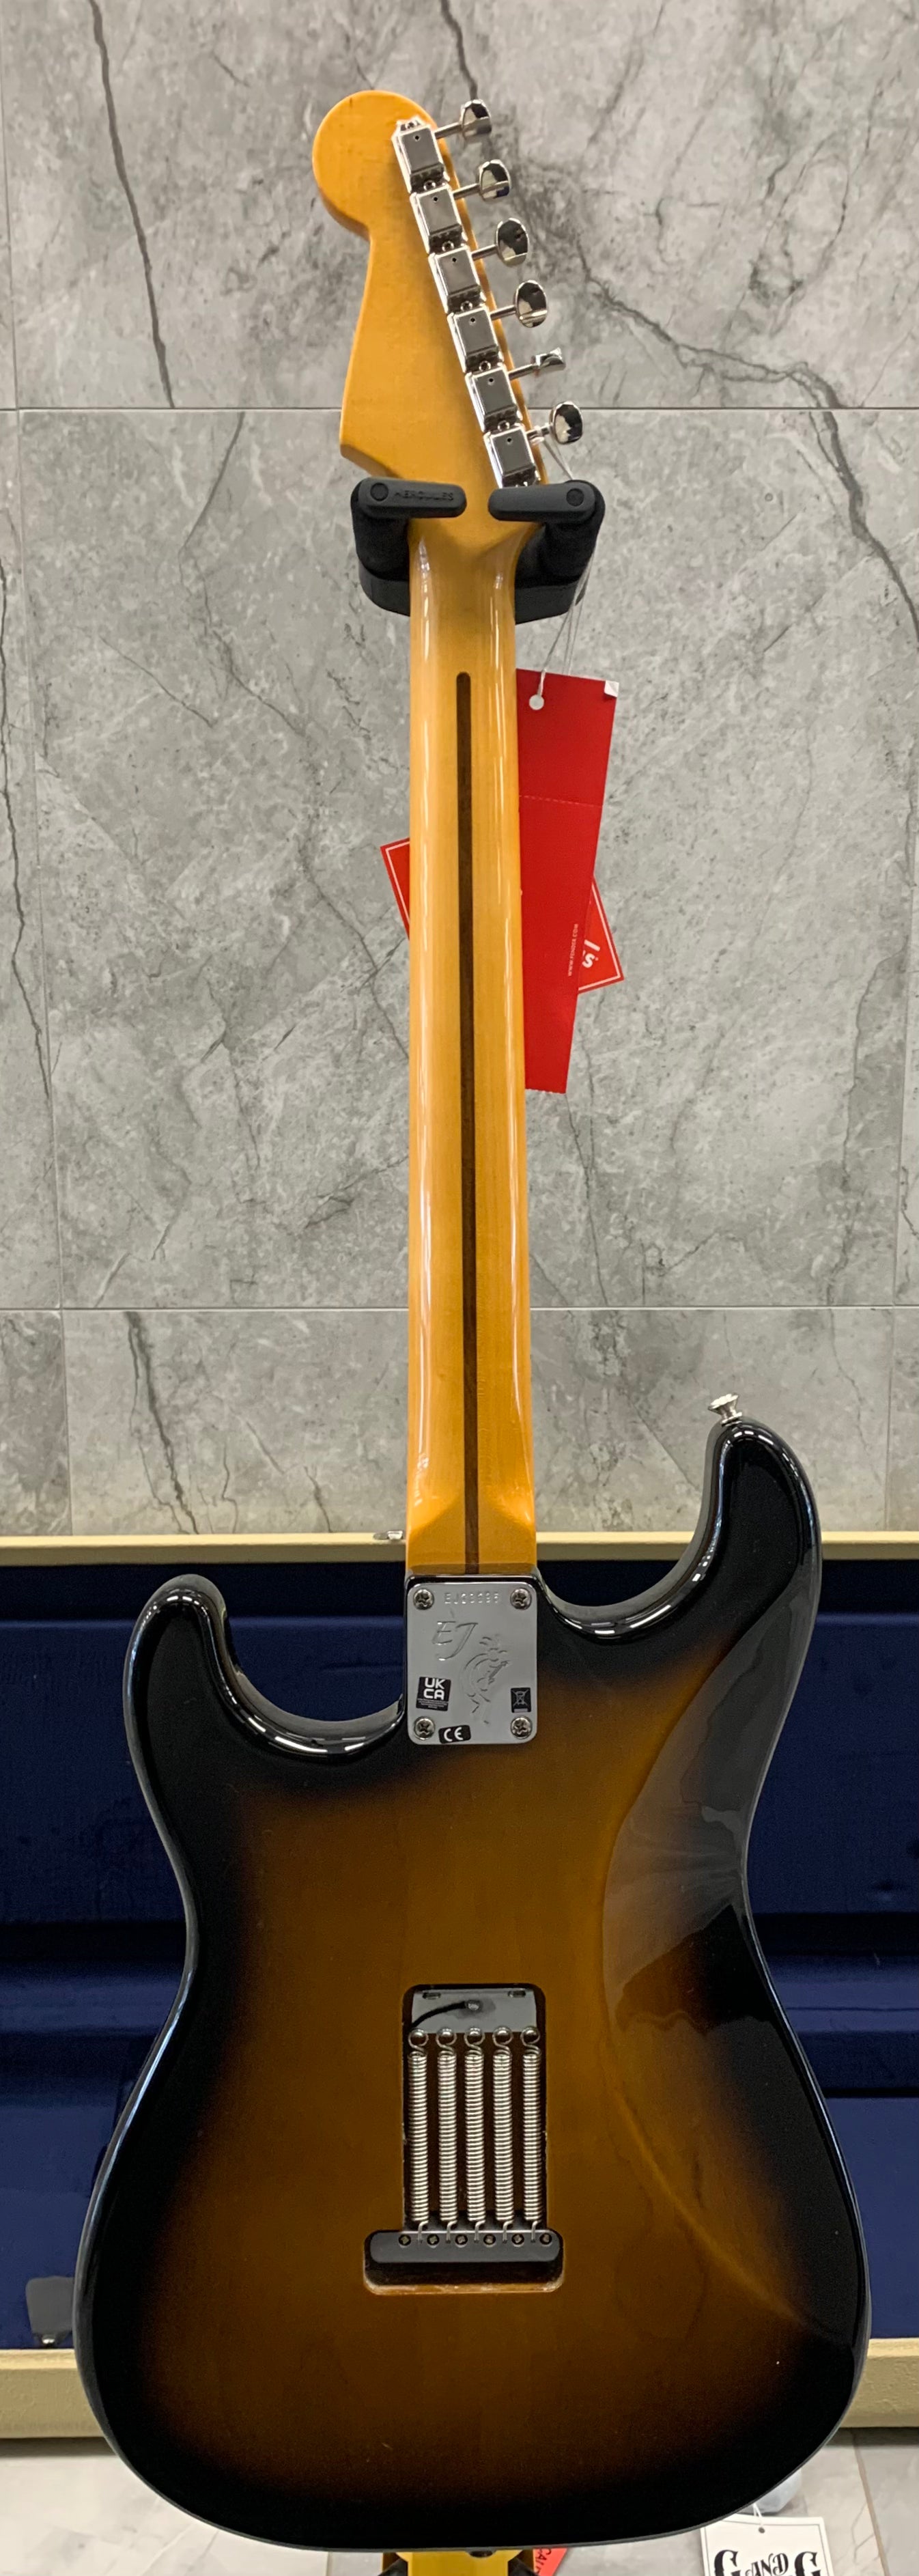 Fender Eric Johnson Stratocaster, Maple Fingerboard, 2 Color Sunburst 0117702803 SERIAL NUMBER EJ23696 - 8.0 LBS